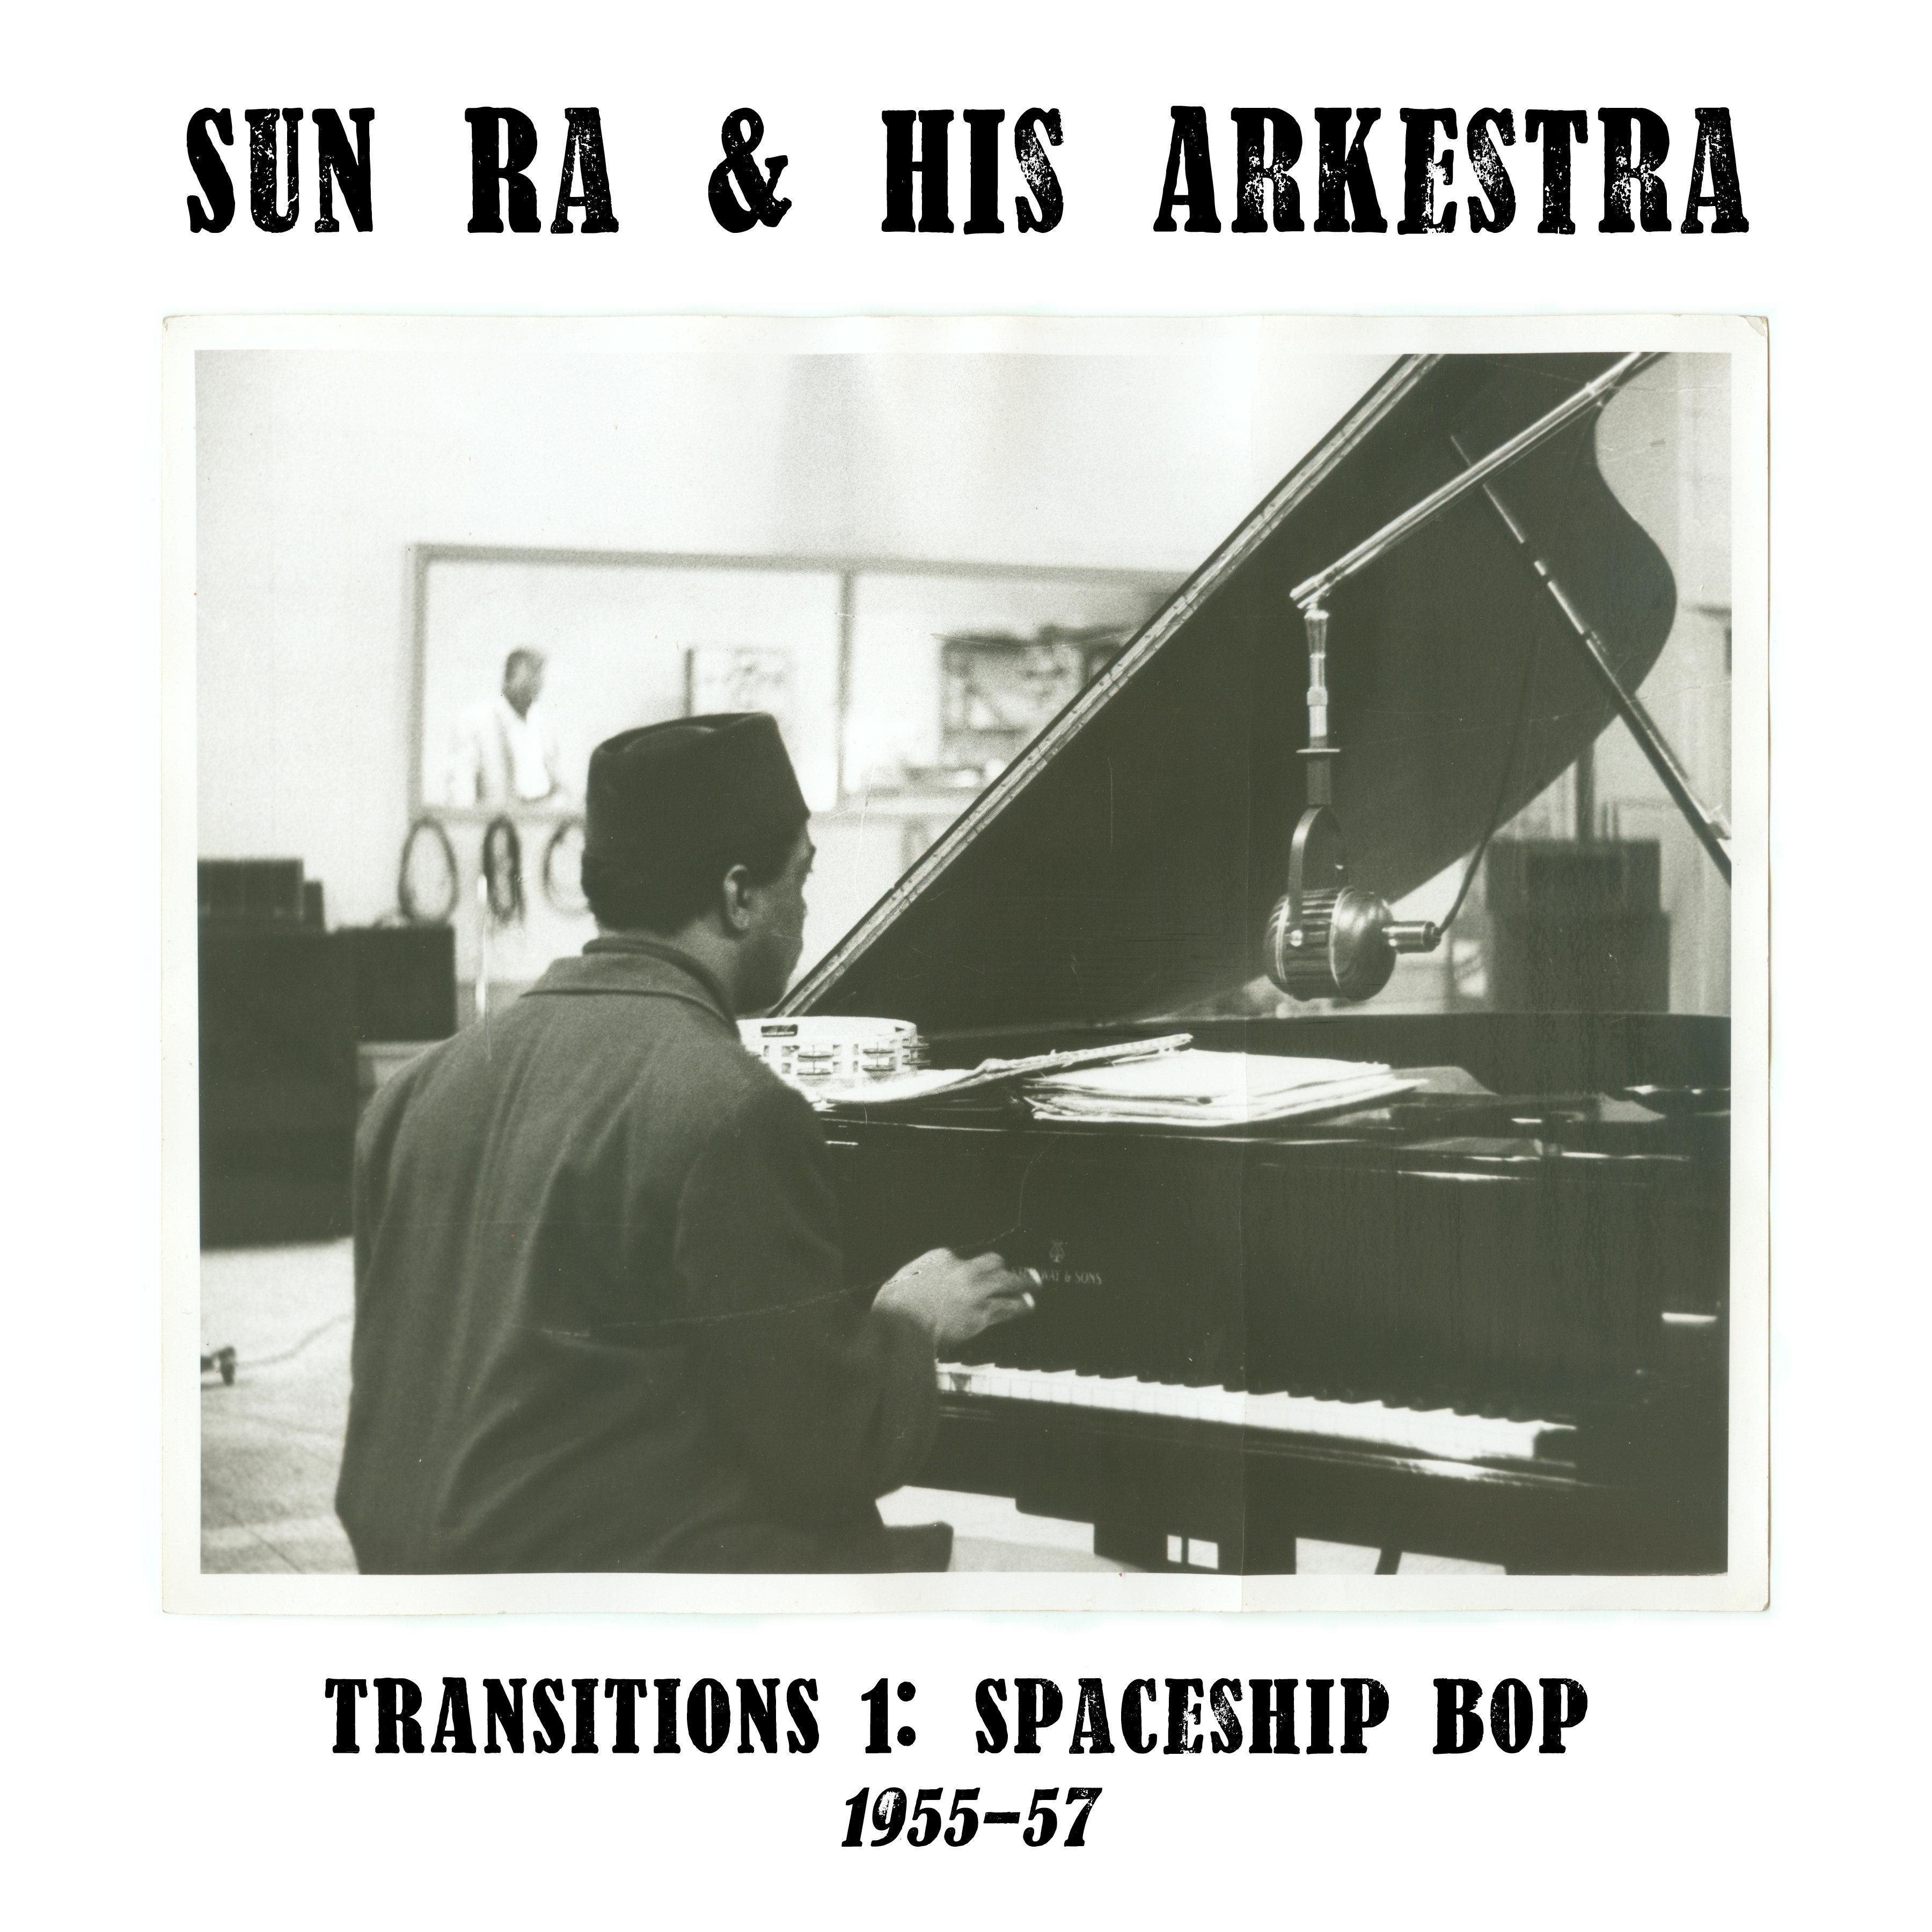 Transitions 1: Spaceship Bop (1955-57)